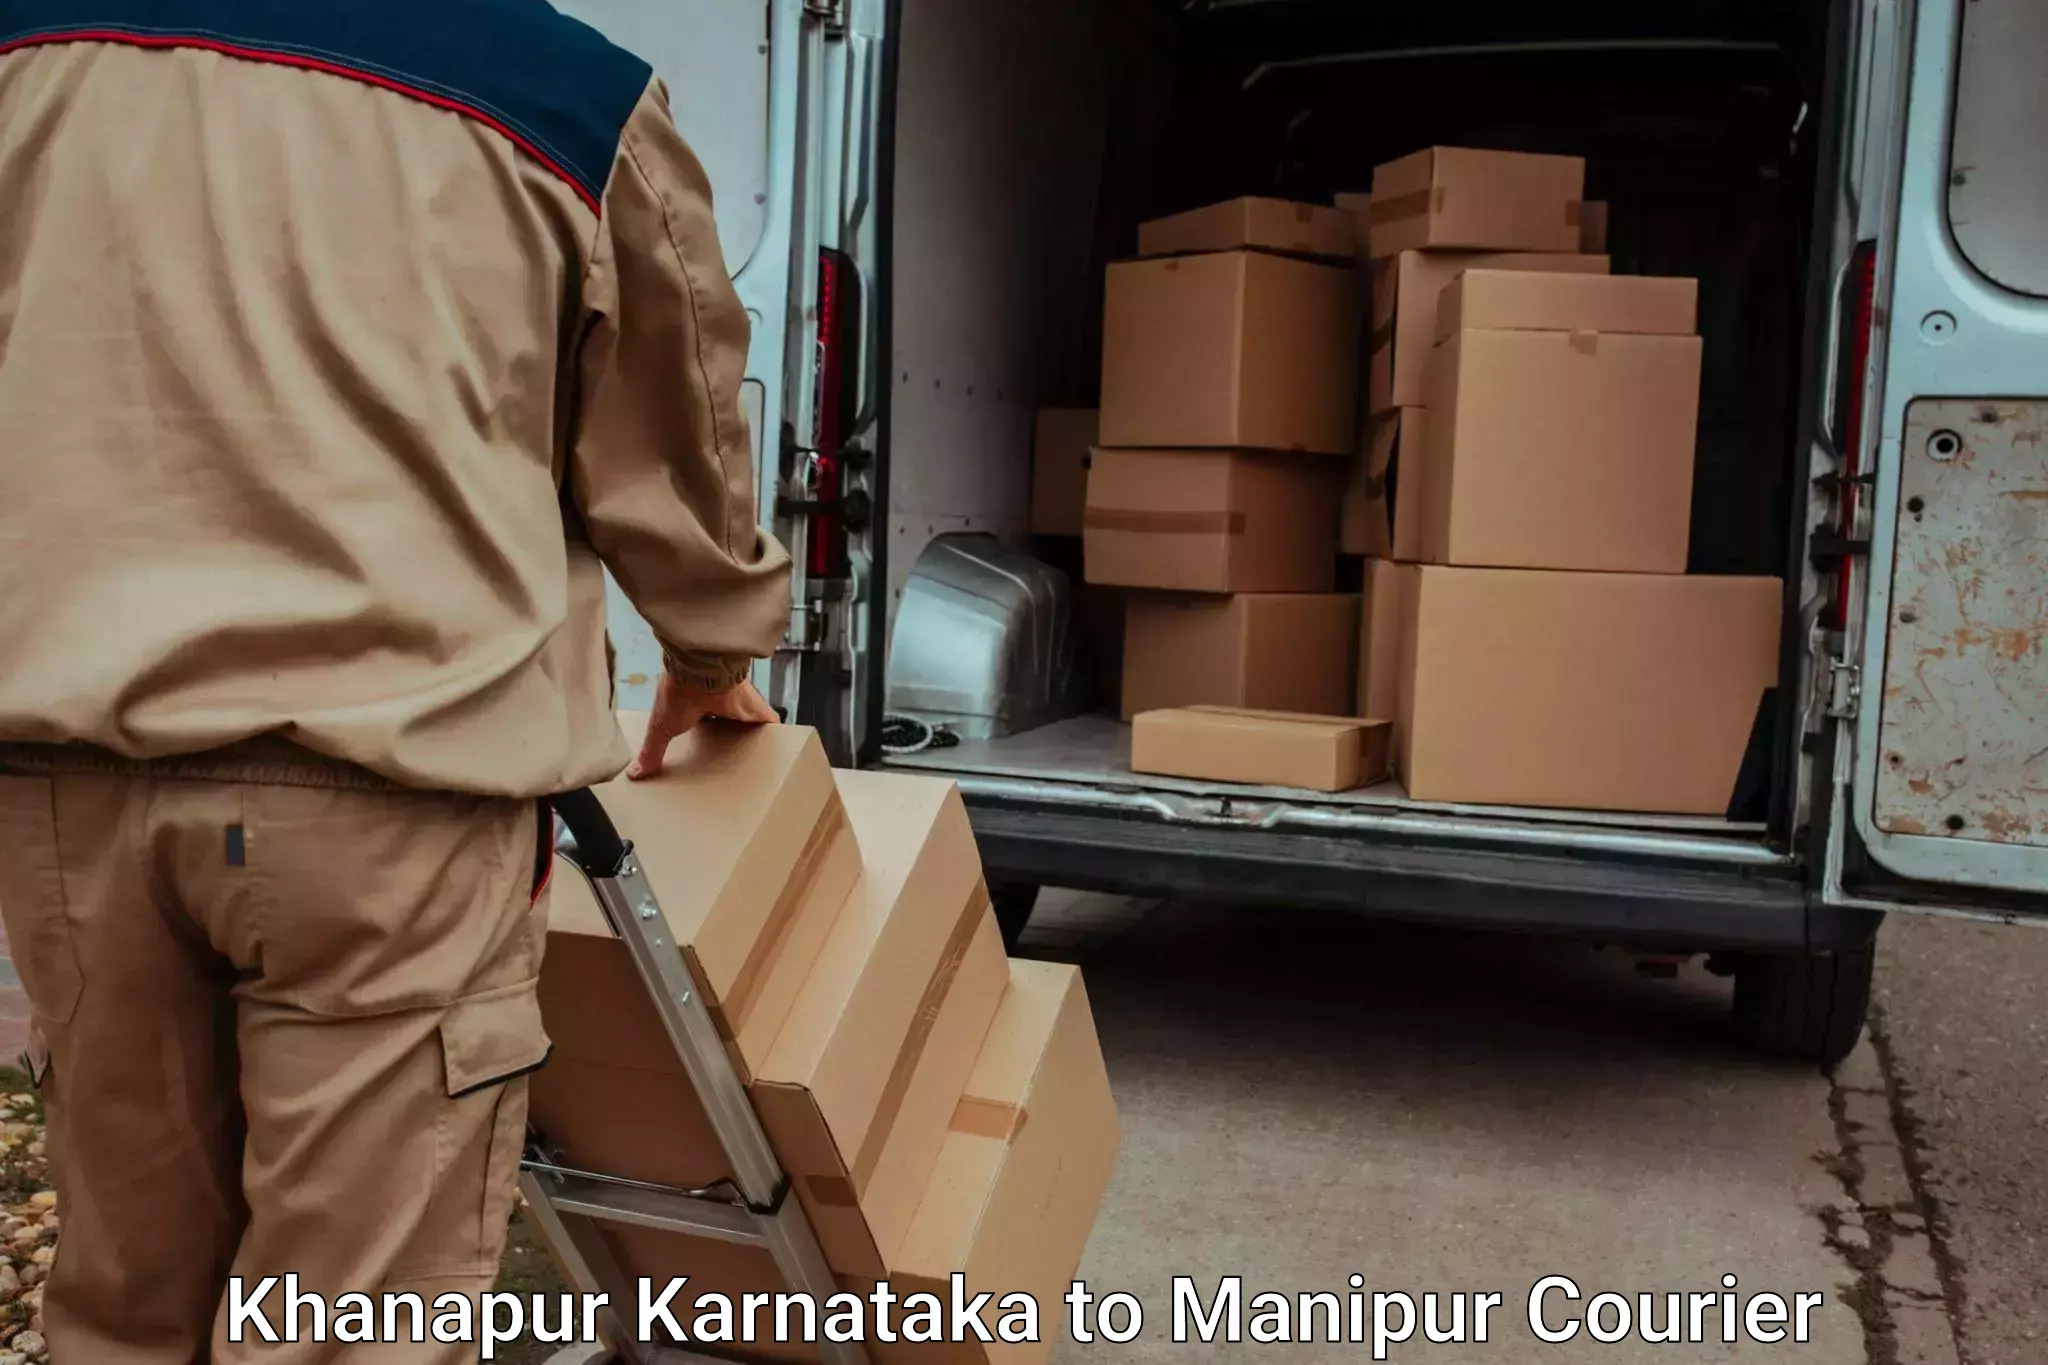 Baggage delivery technology Khanapur Karnataka to Imphal